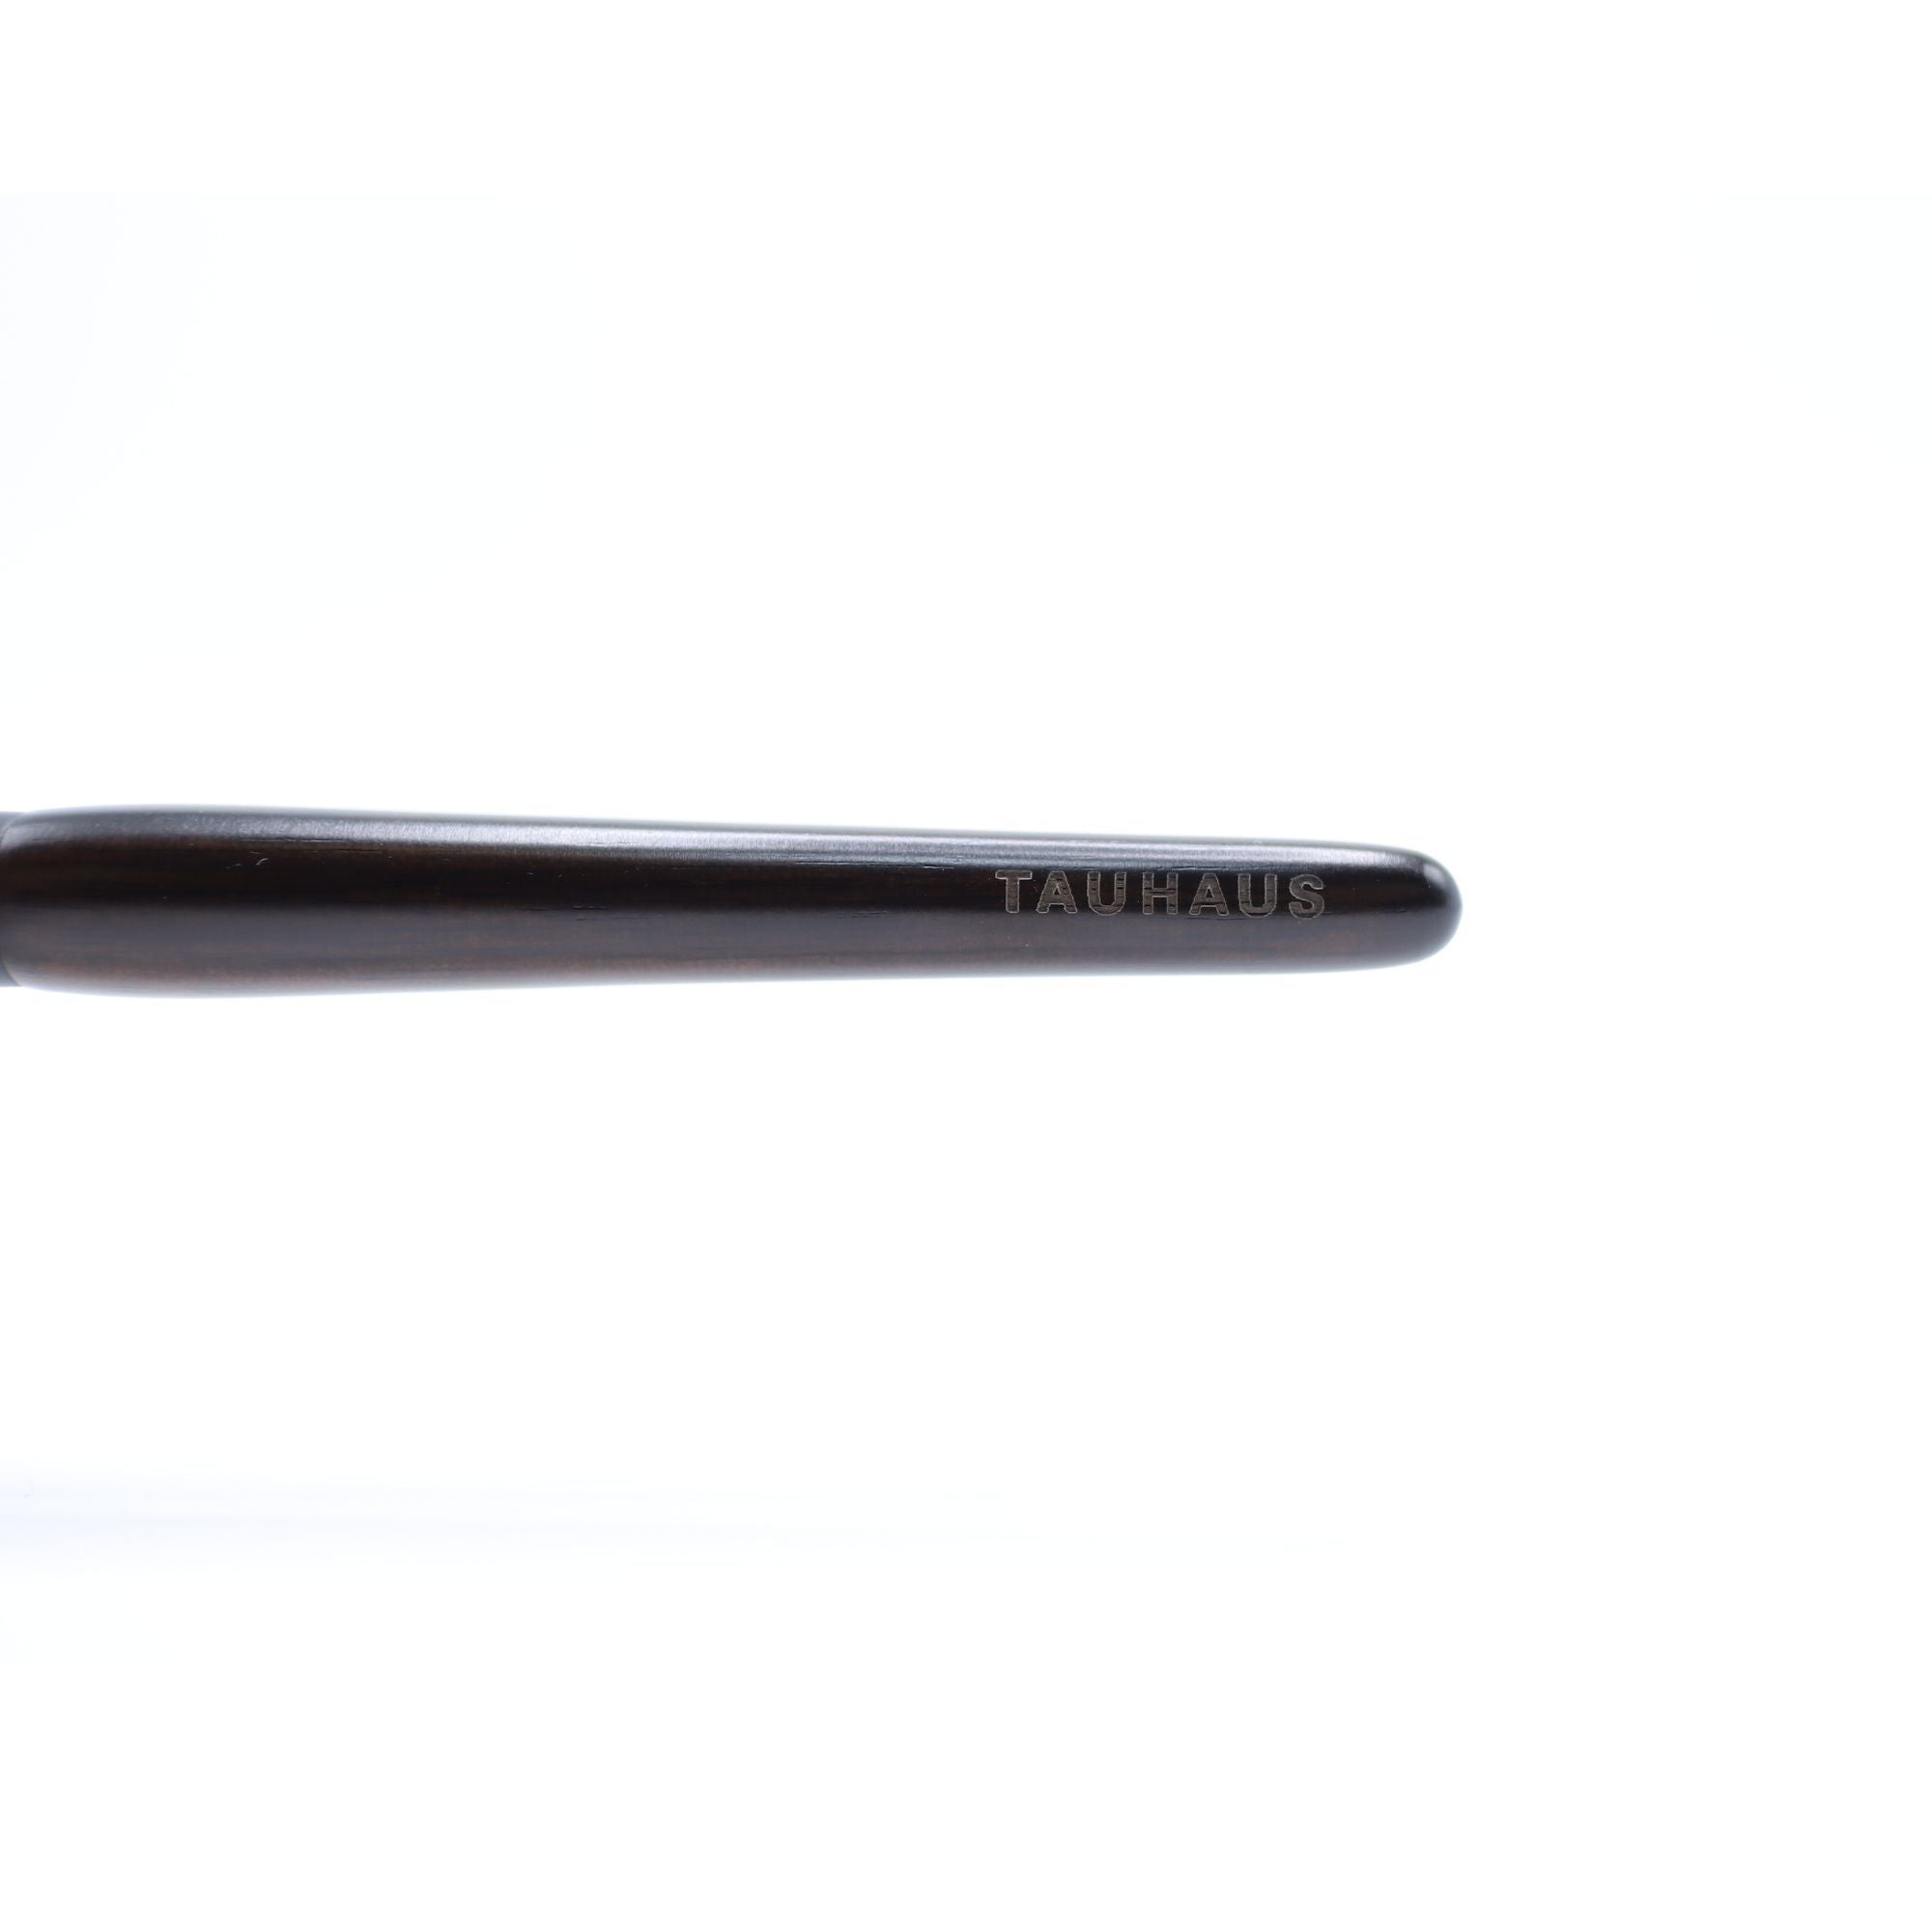 Tauhaus EH-04 Small Eyeshadow Brush, Ode Series - Fude Beauty, Japanese Makeup Brushes